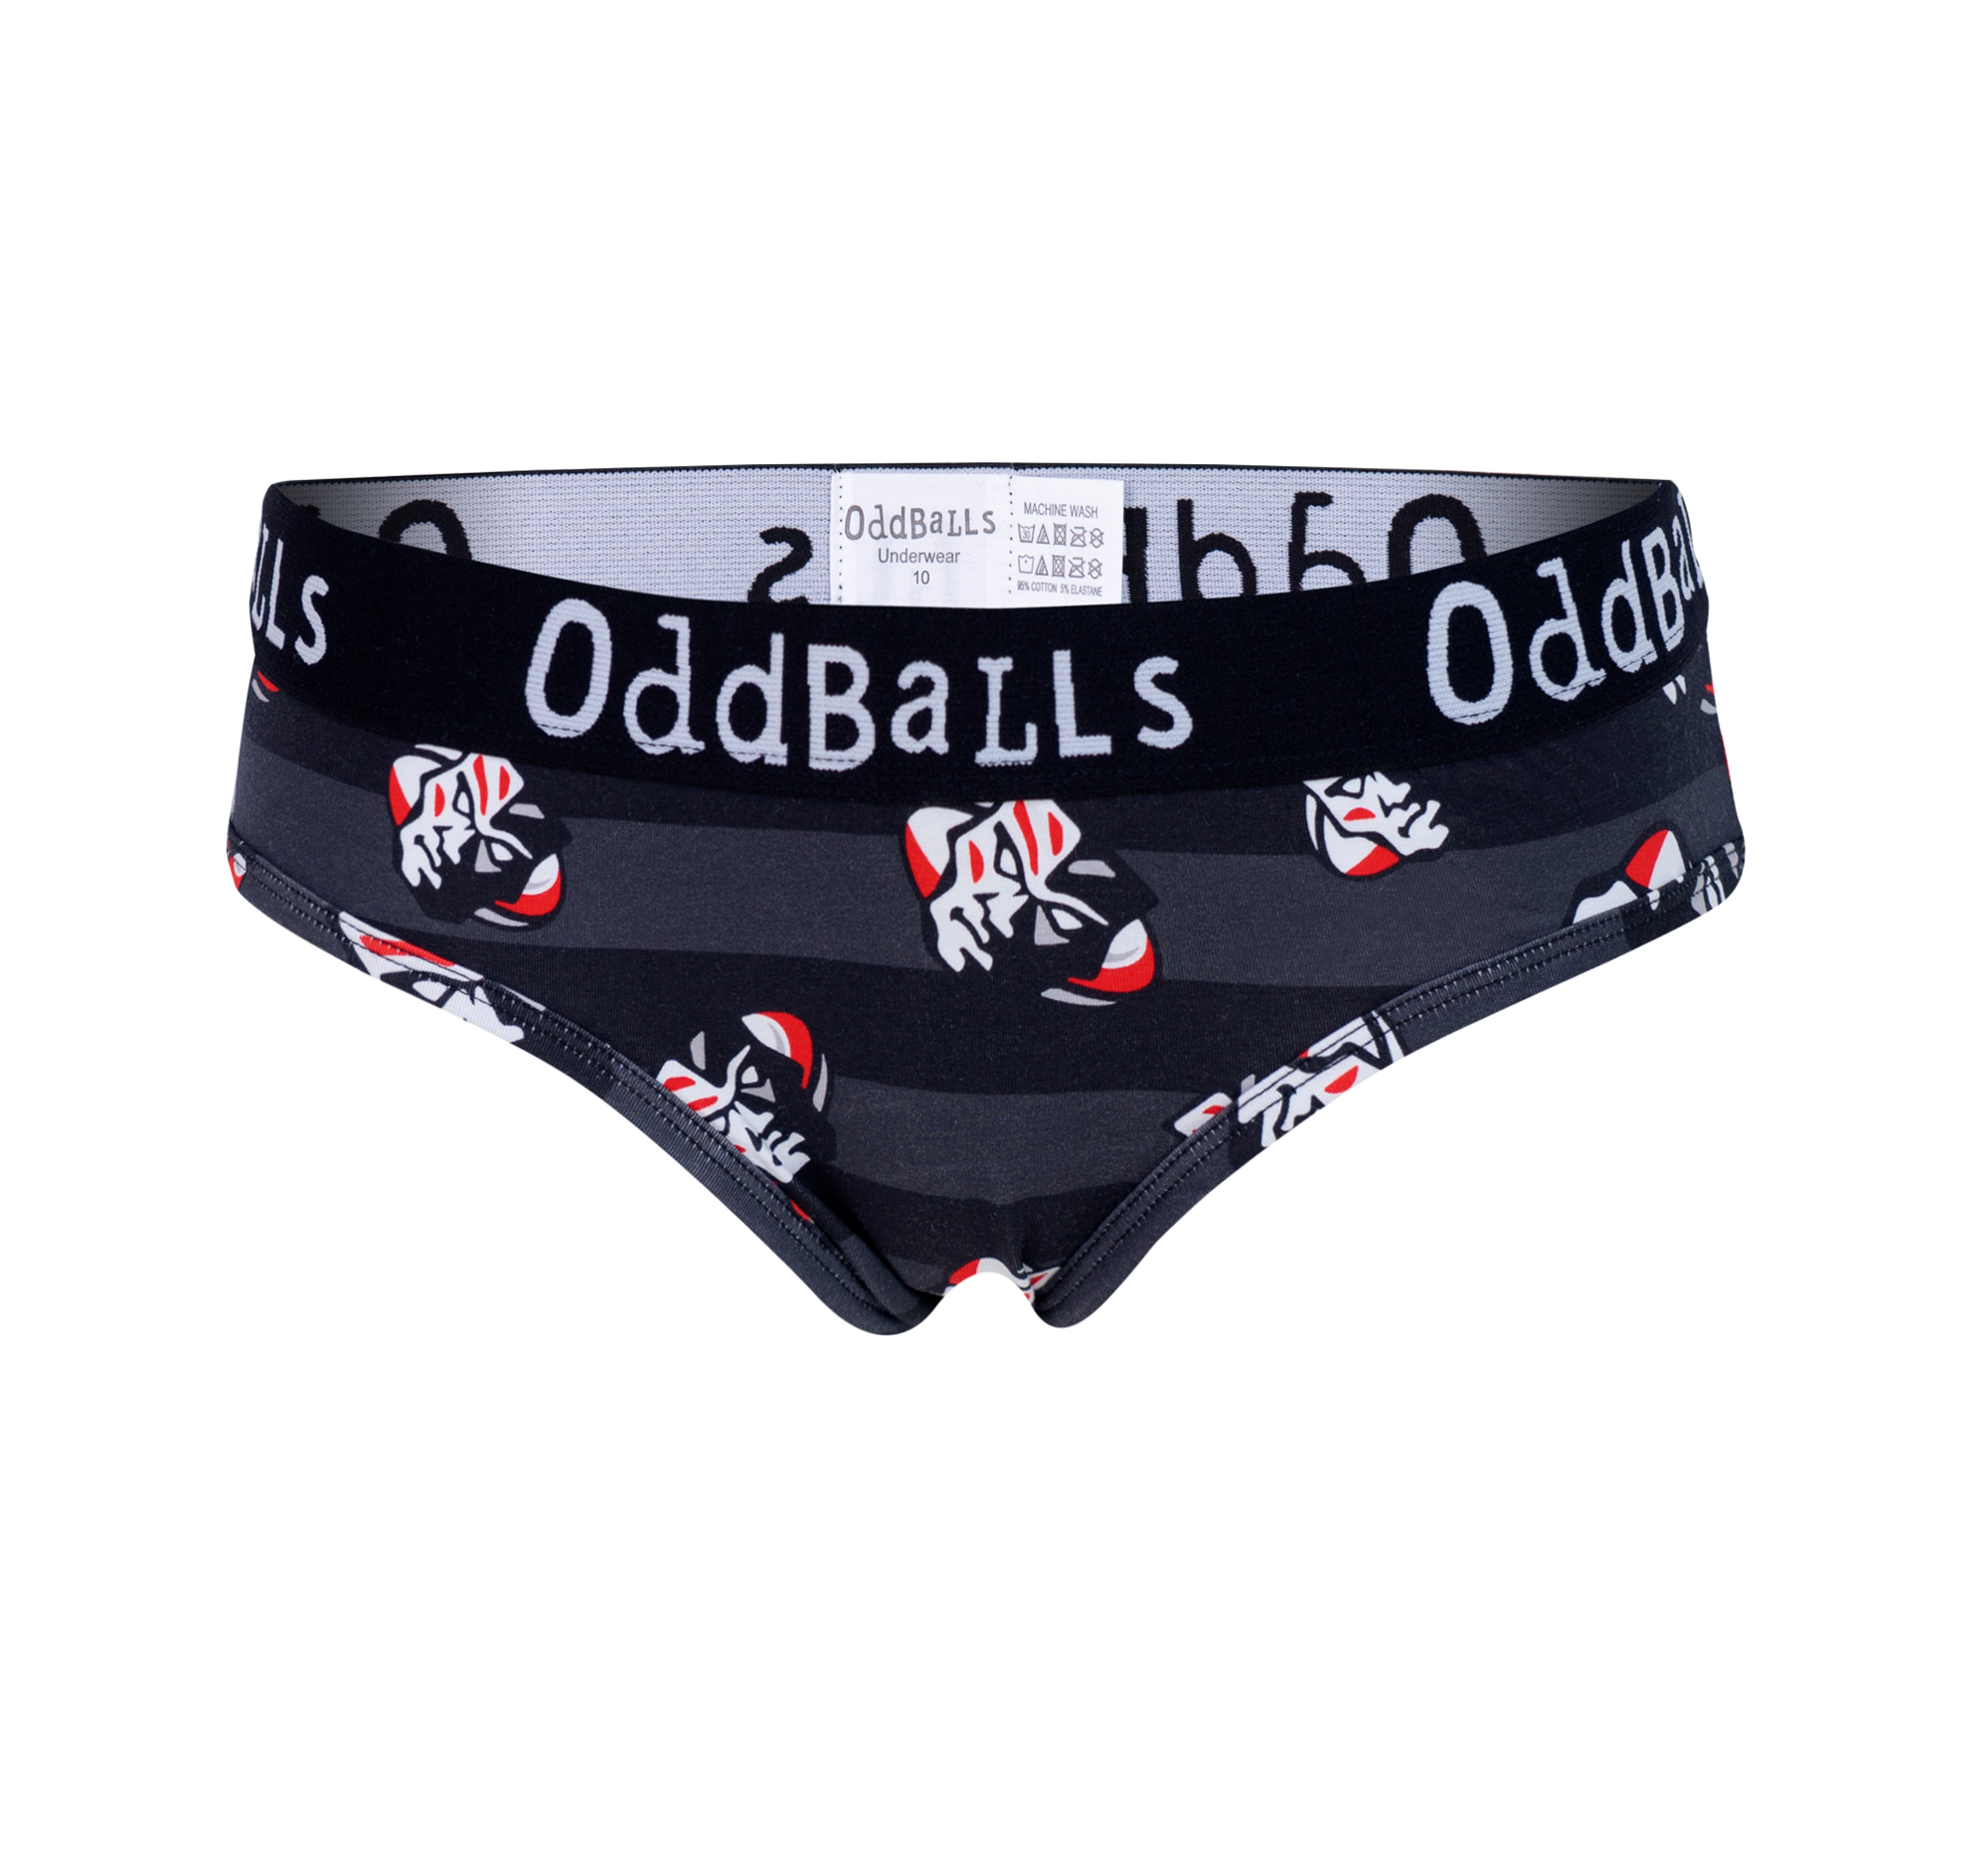 OddBalls Boxer